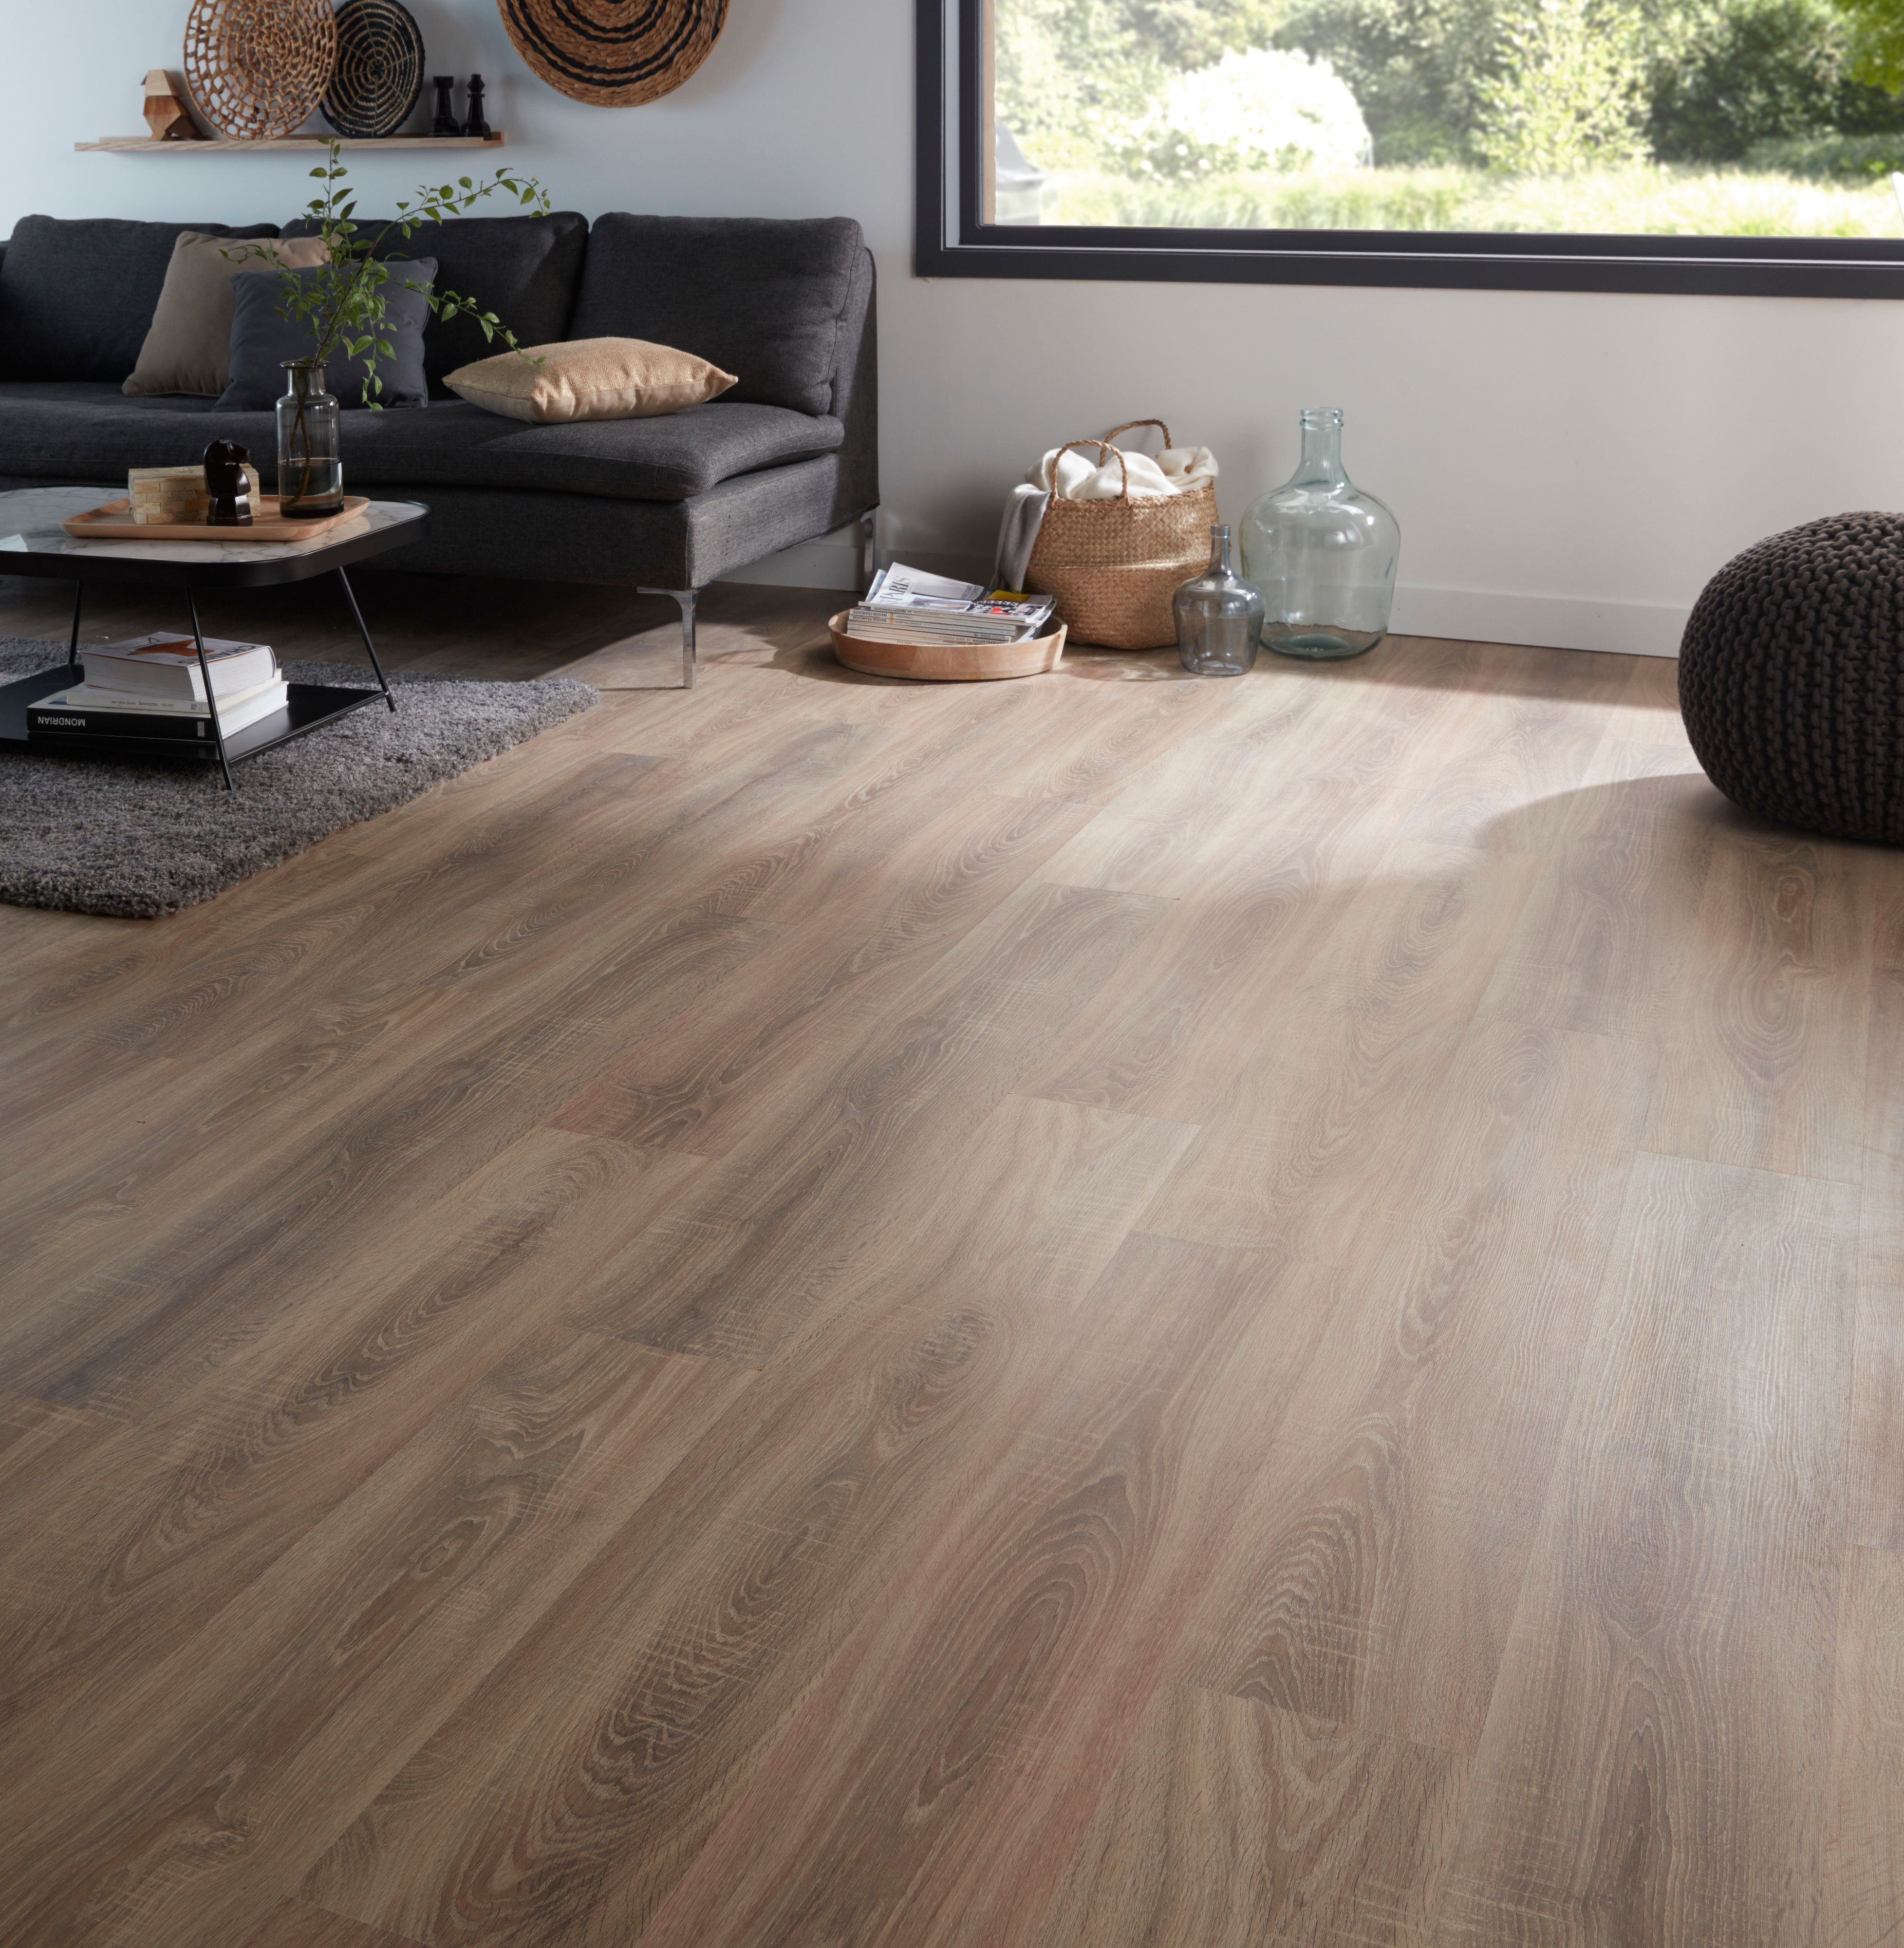 Goodhome Albury Natural Oak Effect Laminate Flooring 2 47m